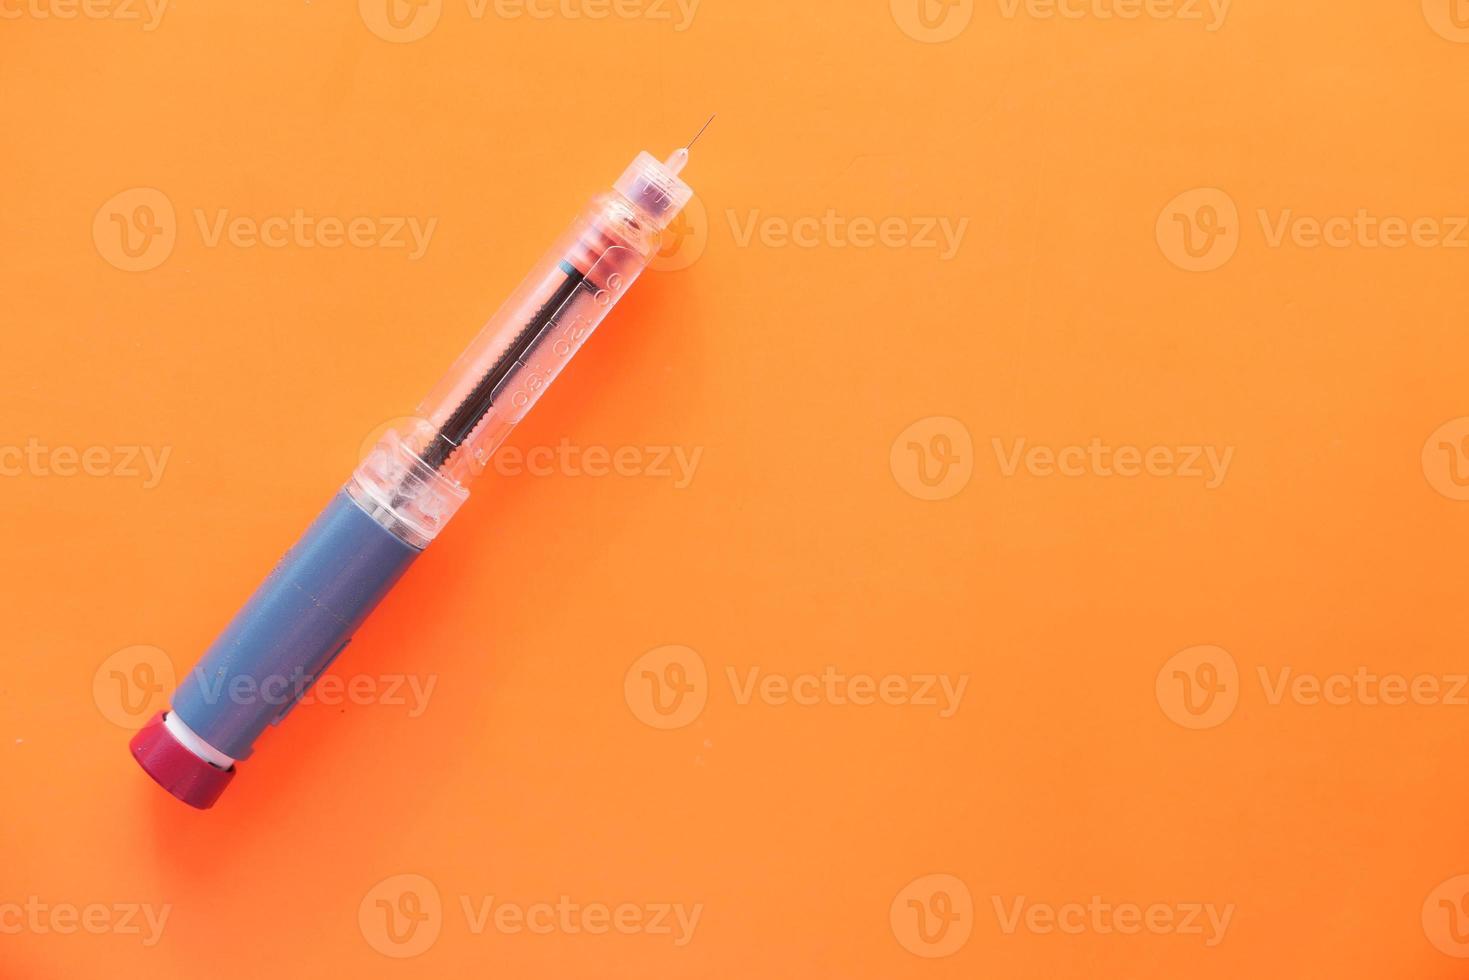 stylo à insuline sur fond orange photo